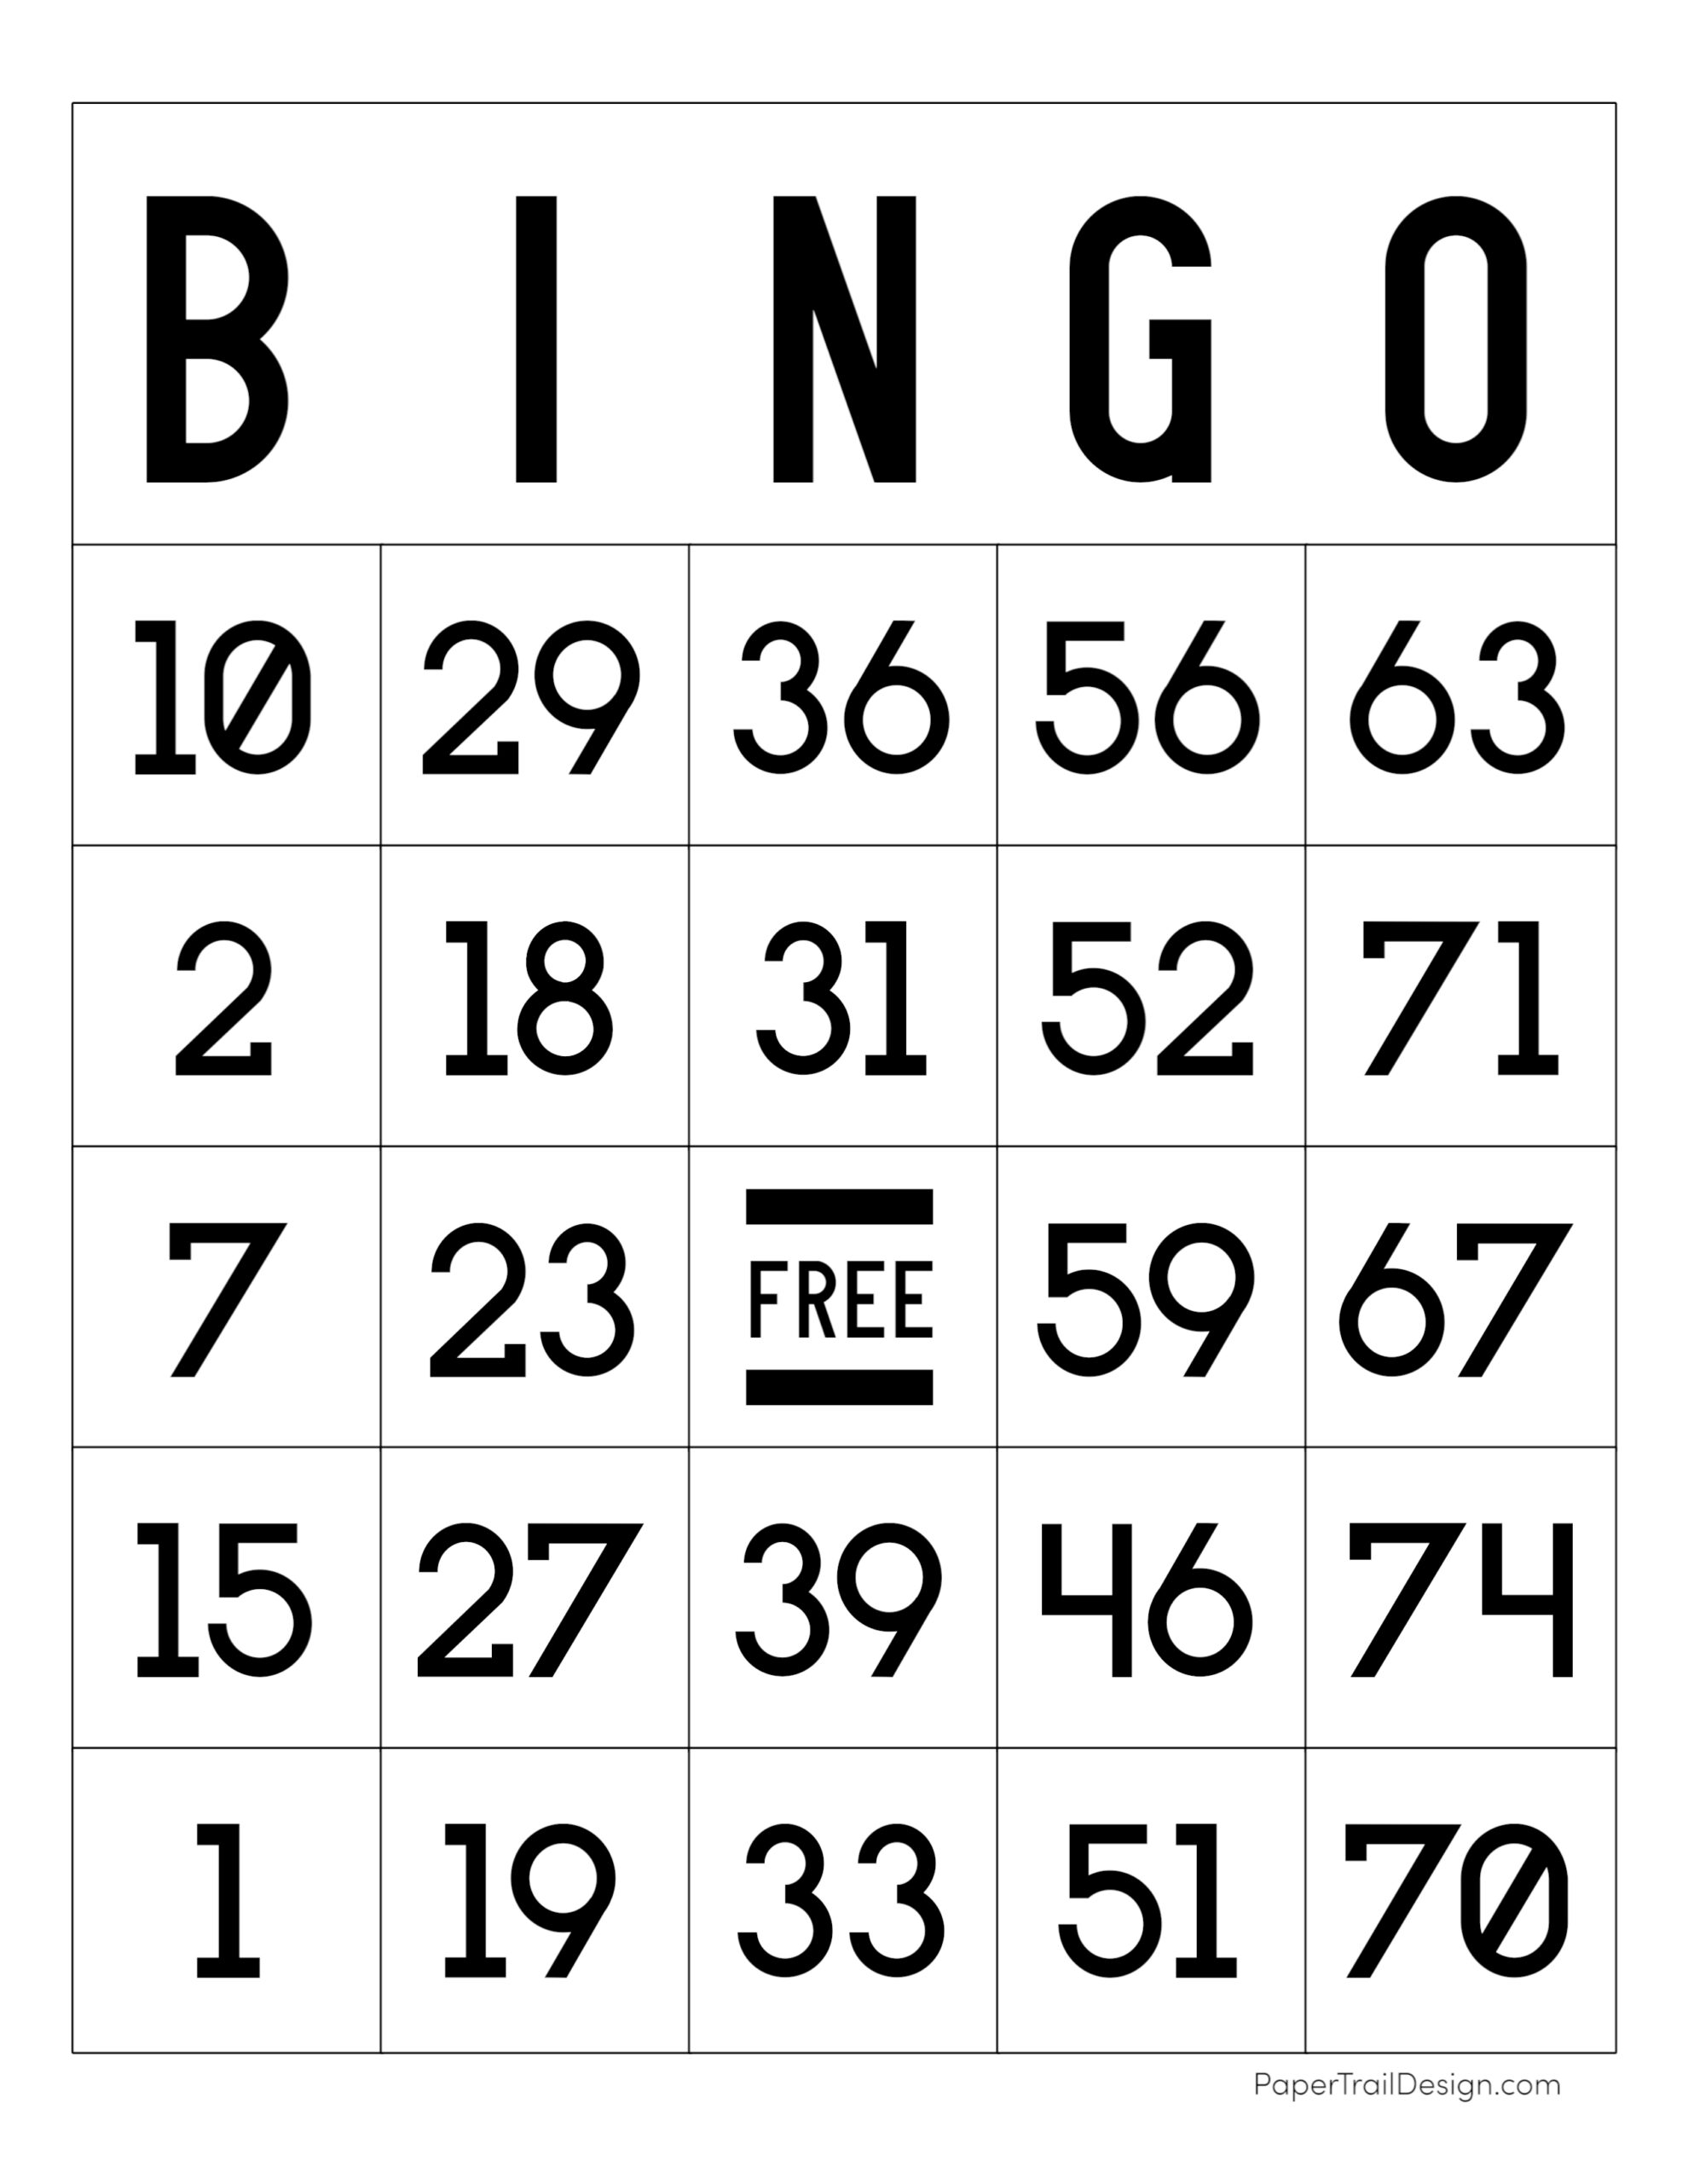 bingo-board-printable-free-free-printable-templates